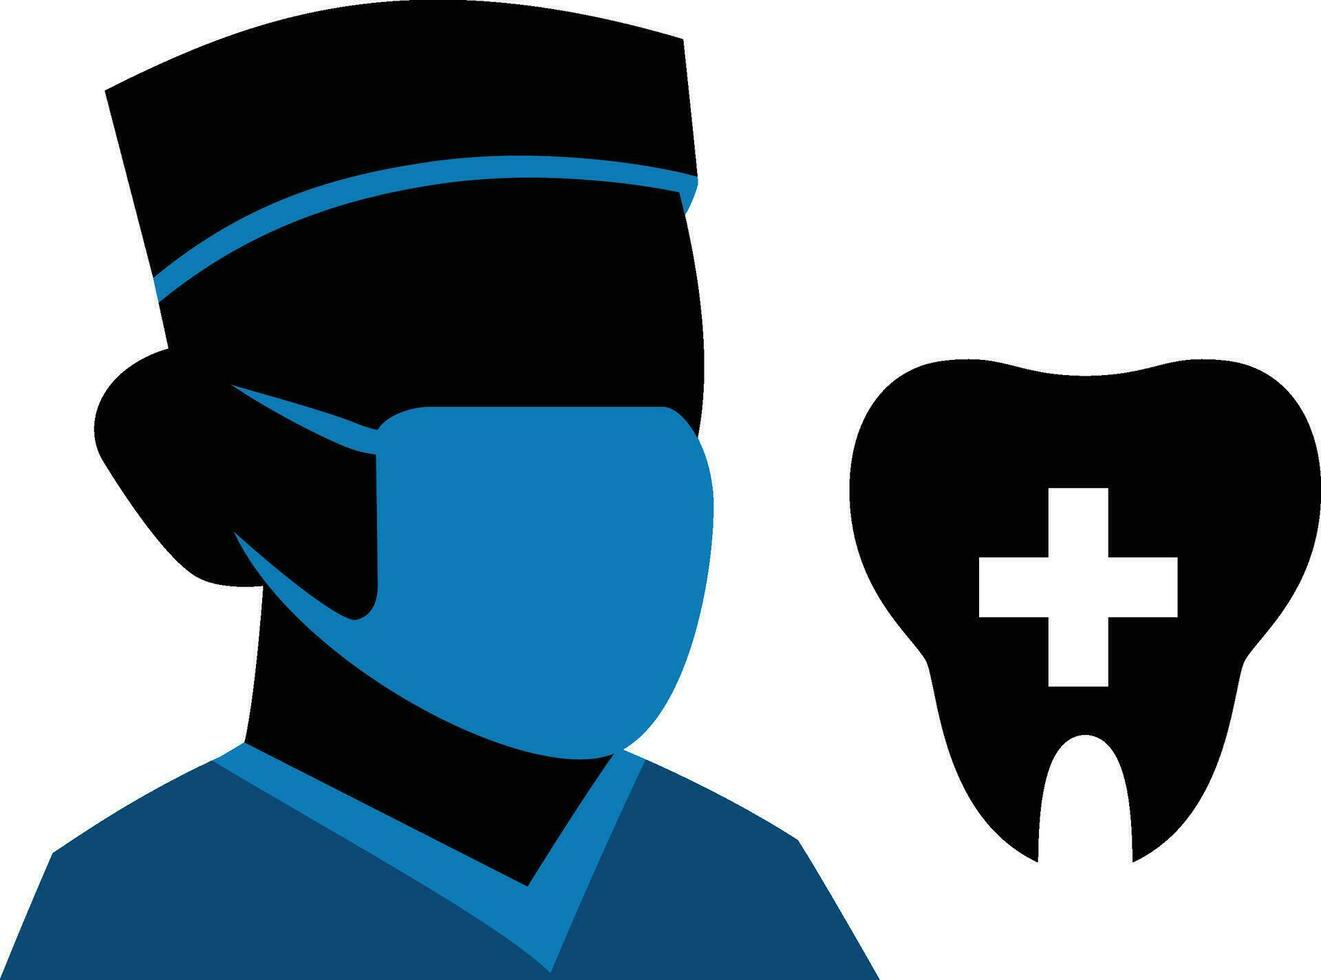 Dentist logo template simple style vector , Dentistry , Dental surgeon doctor simple logo , icon , clip art , symbol stock vector image